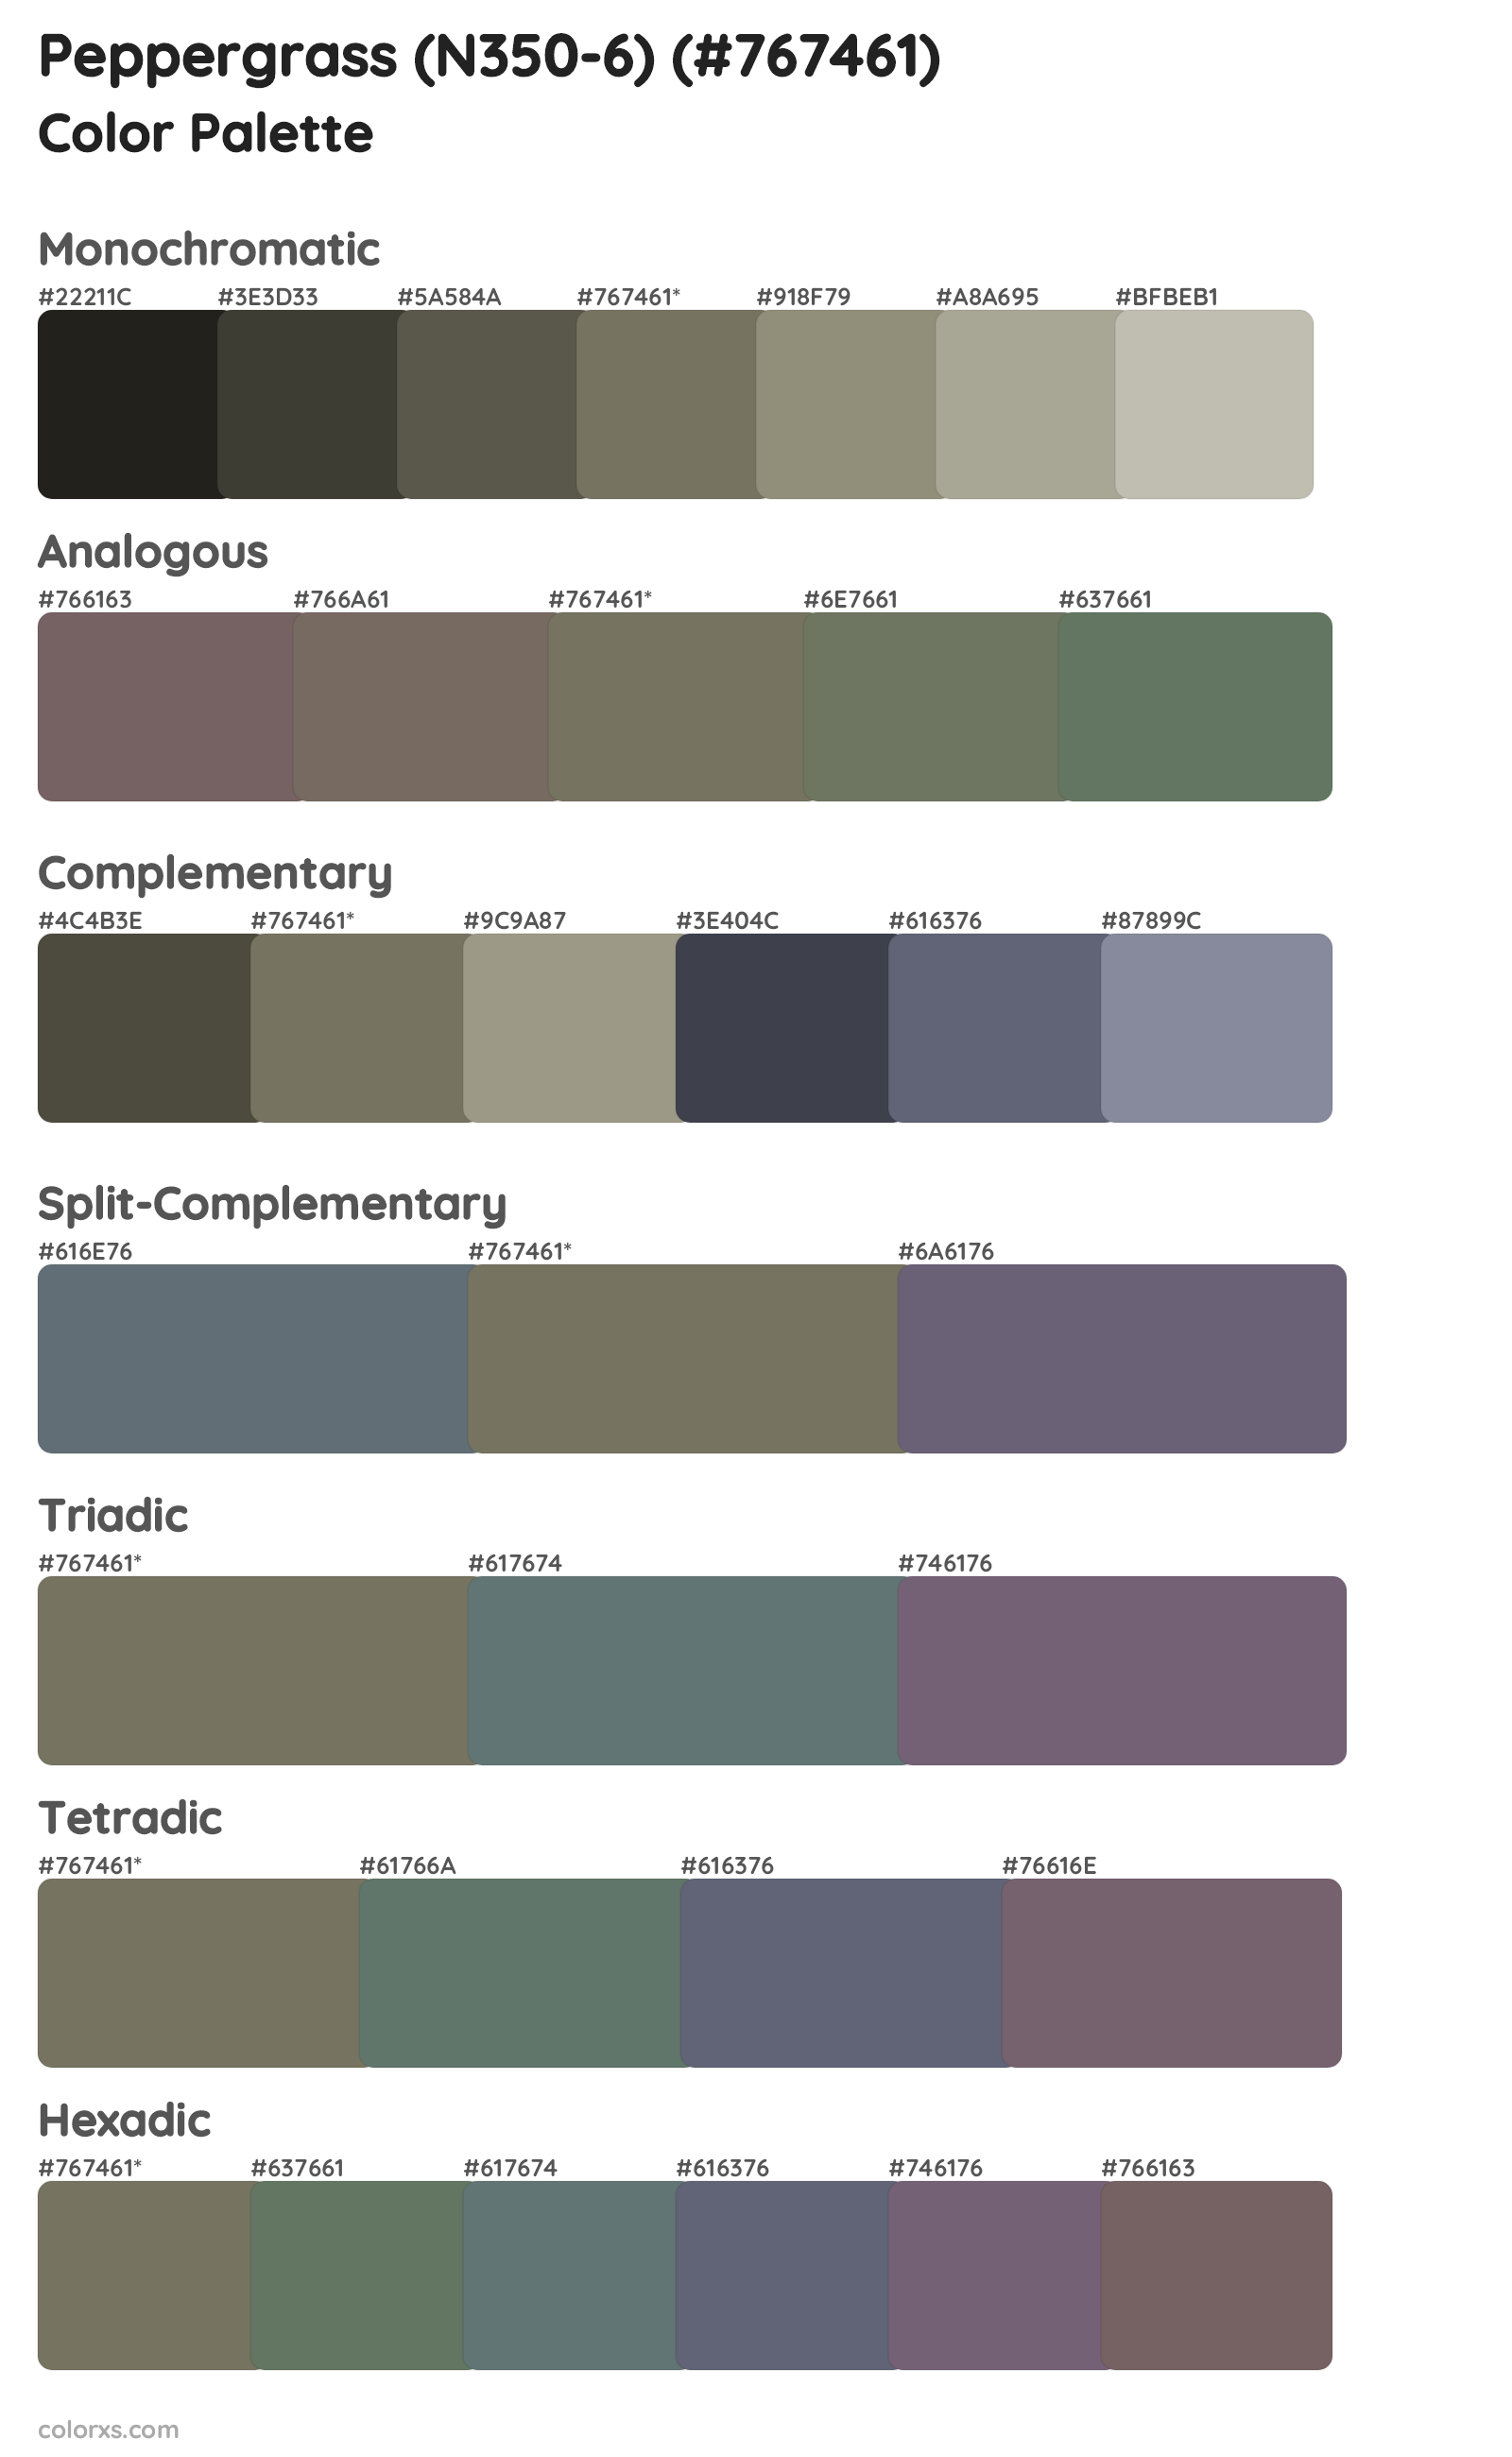 Peppergrass (N350-6) Color Scheme Palettes